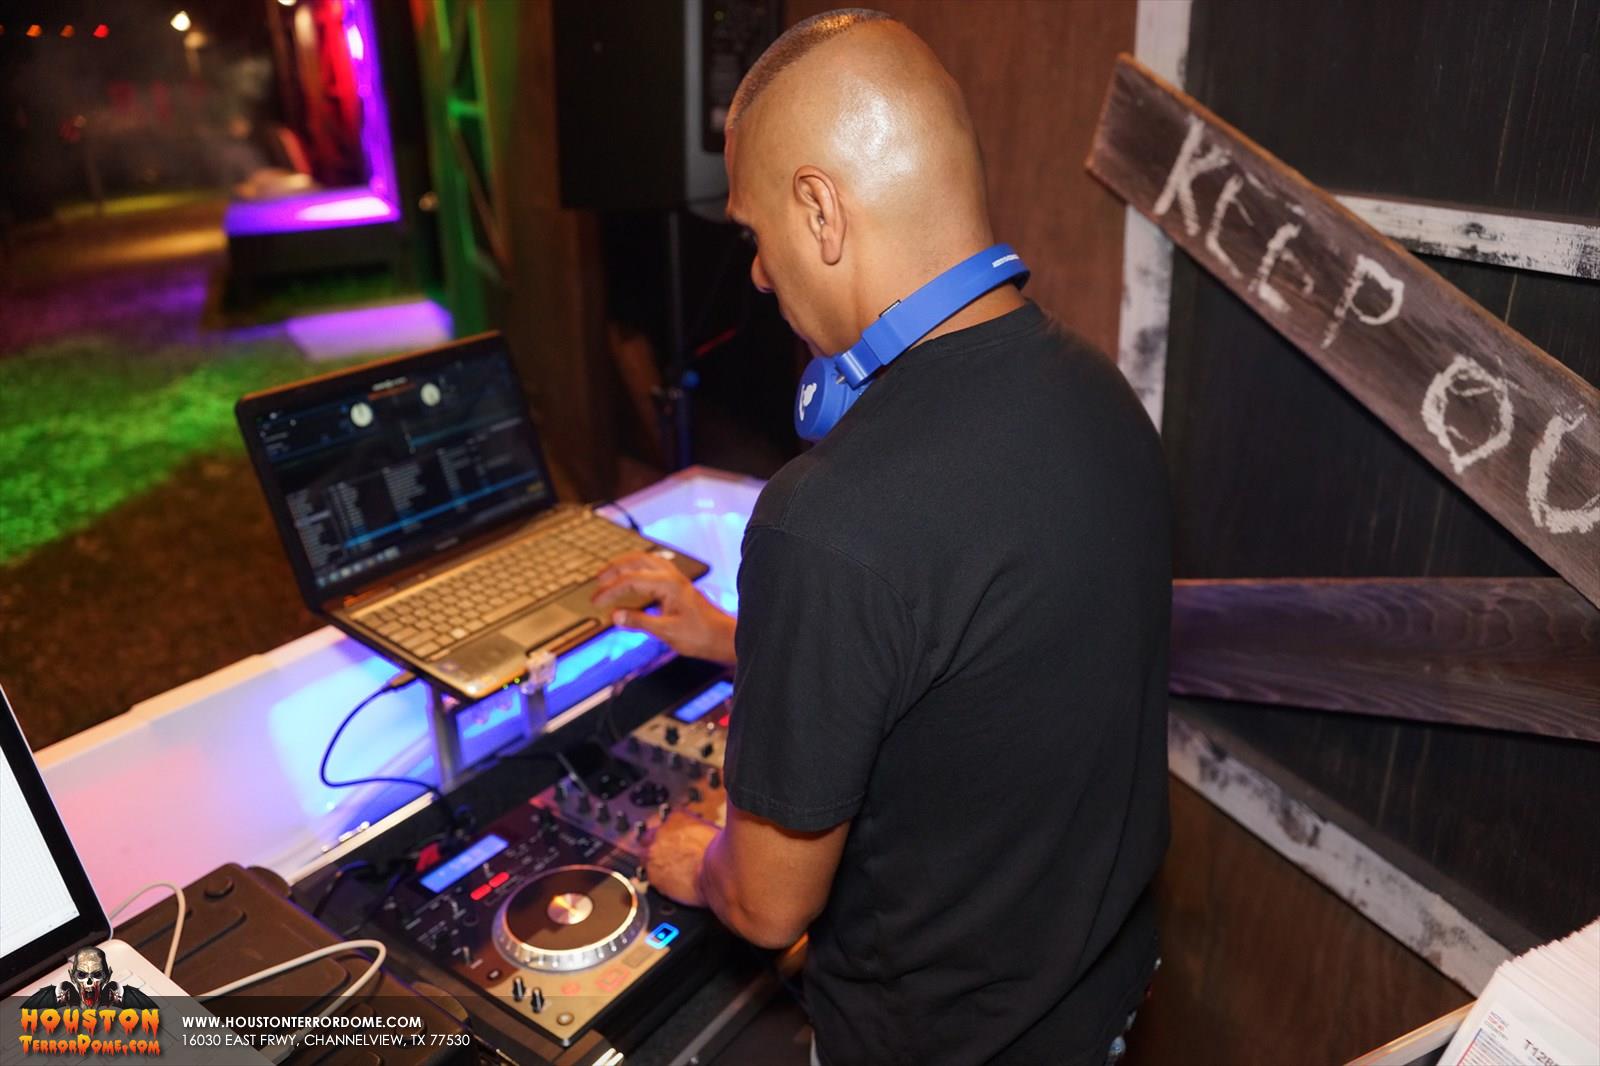 DJ working the music